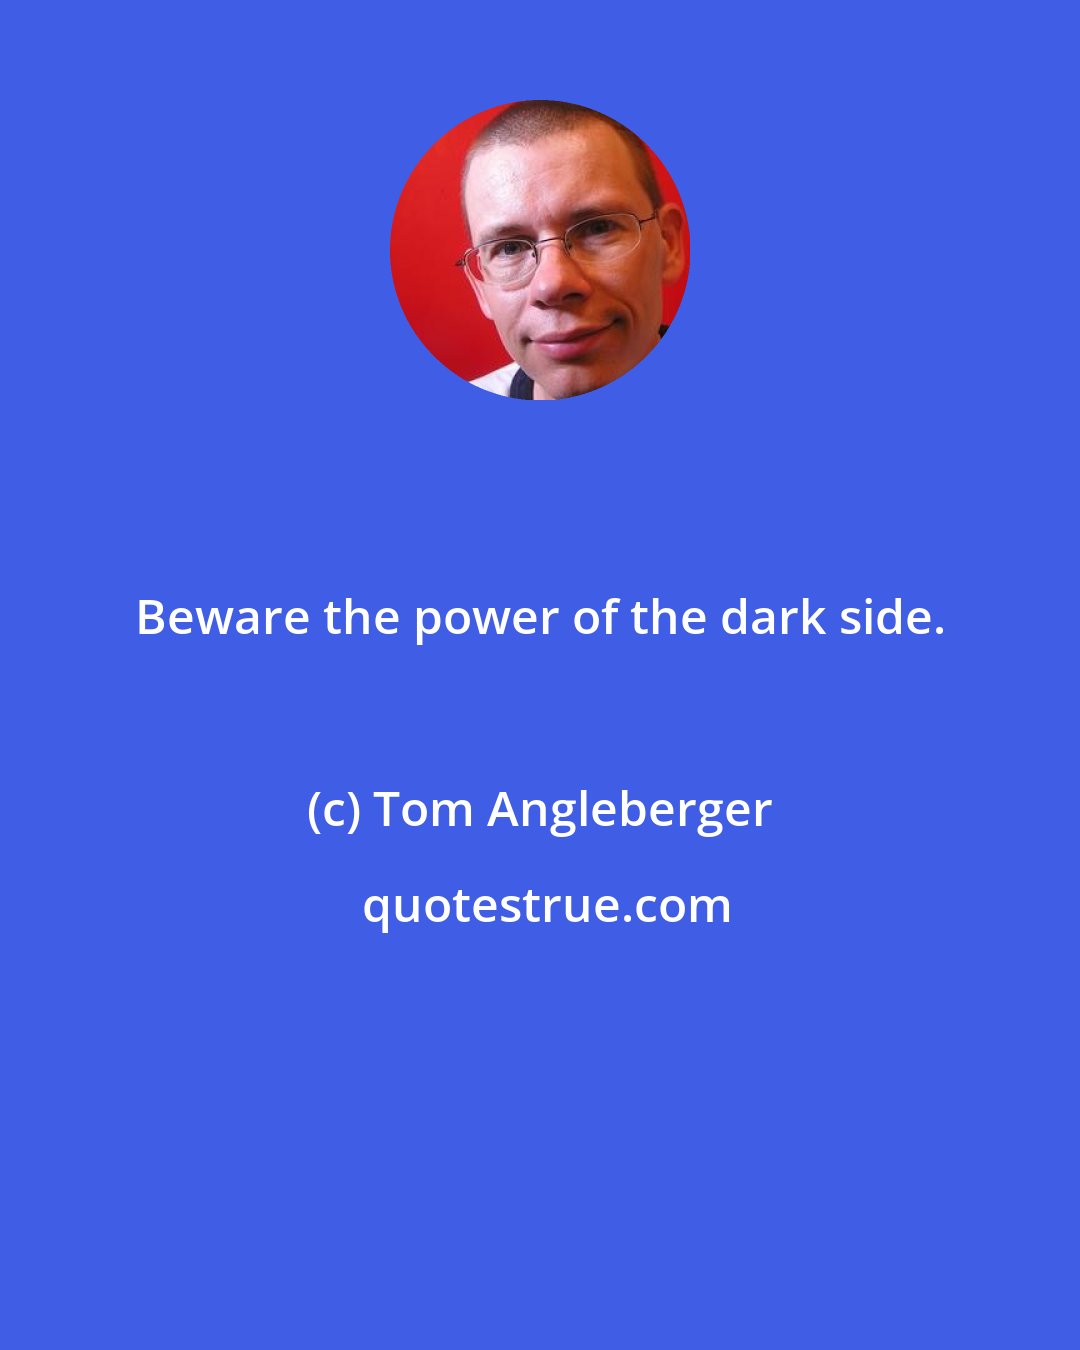 Tom Angleberger: Beware the power of the dark side.